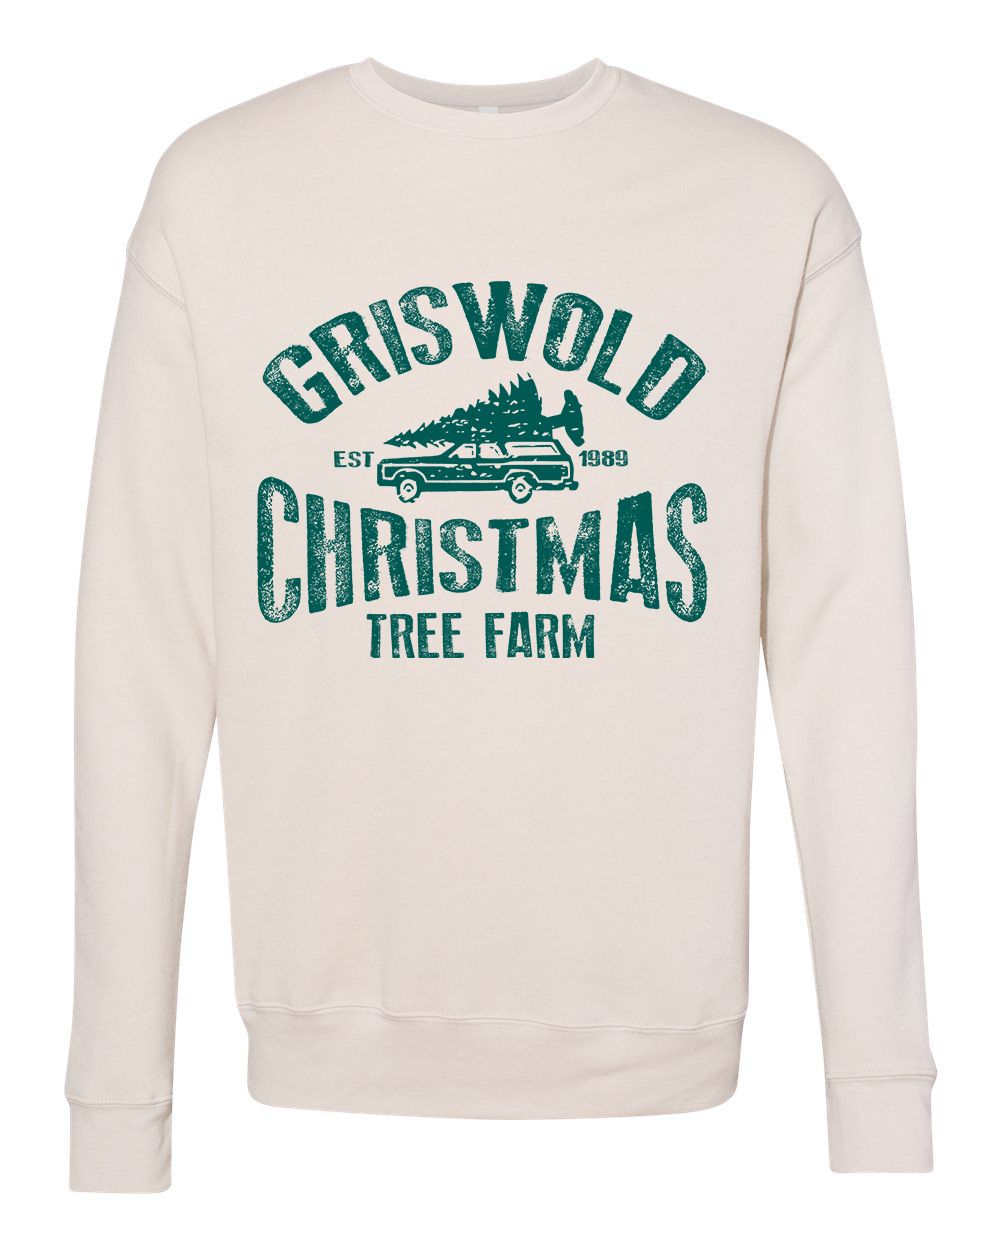 Griswold Christmas Tree Farm Crewneck Sweatshirt - In 3 colors